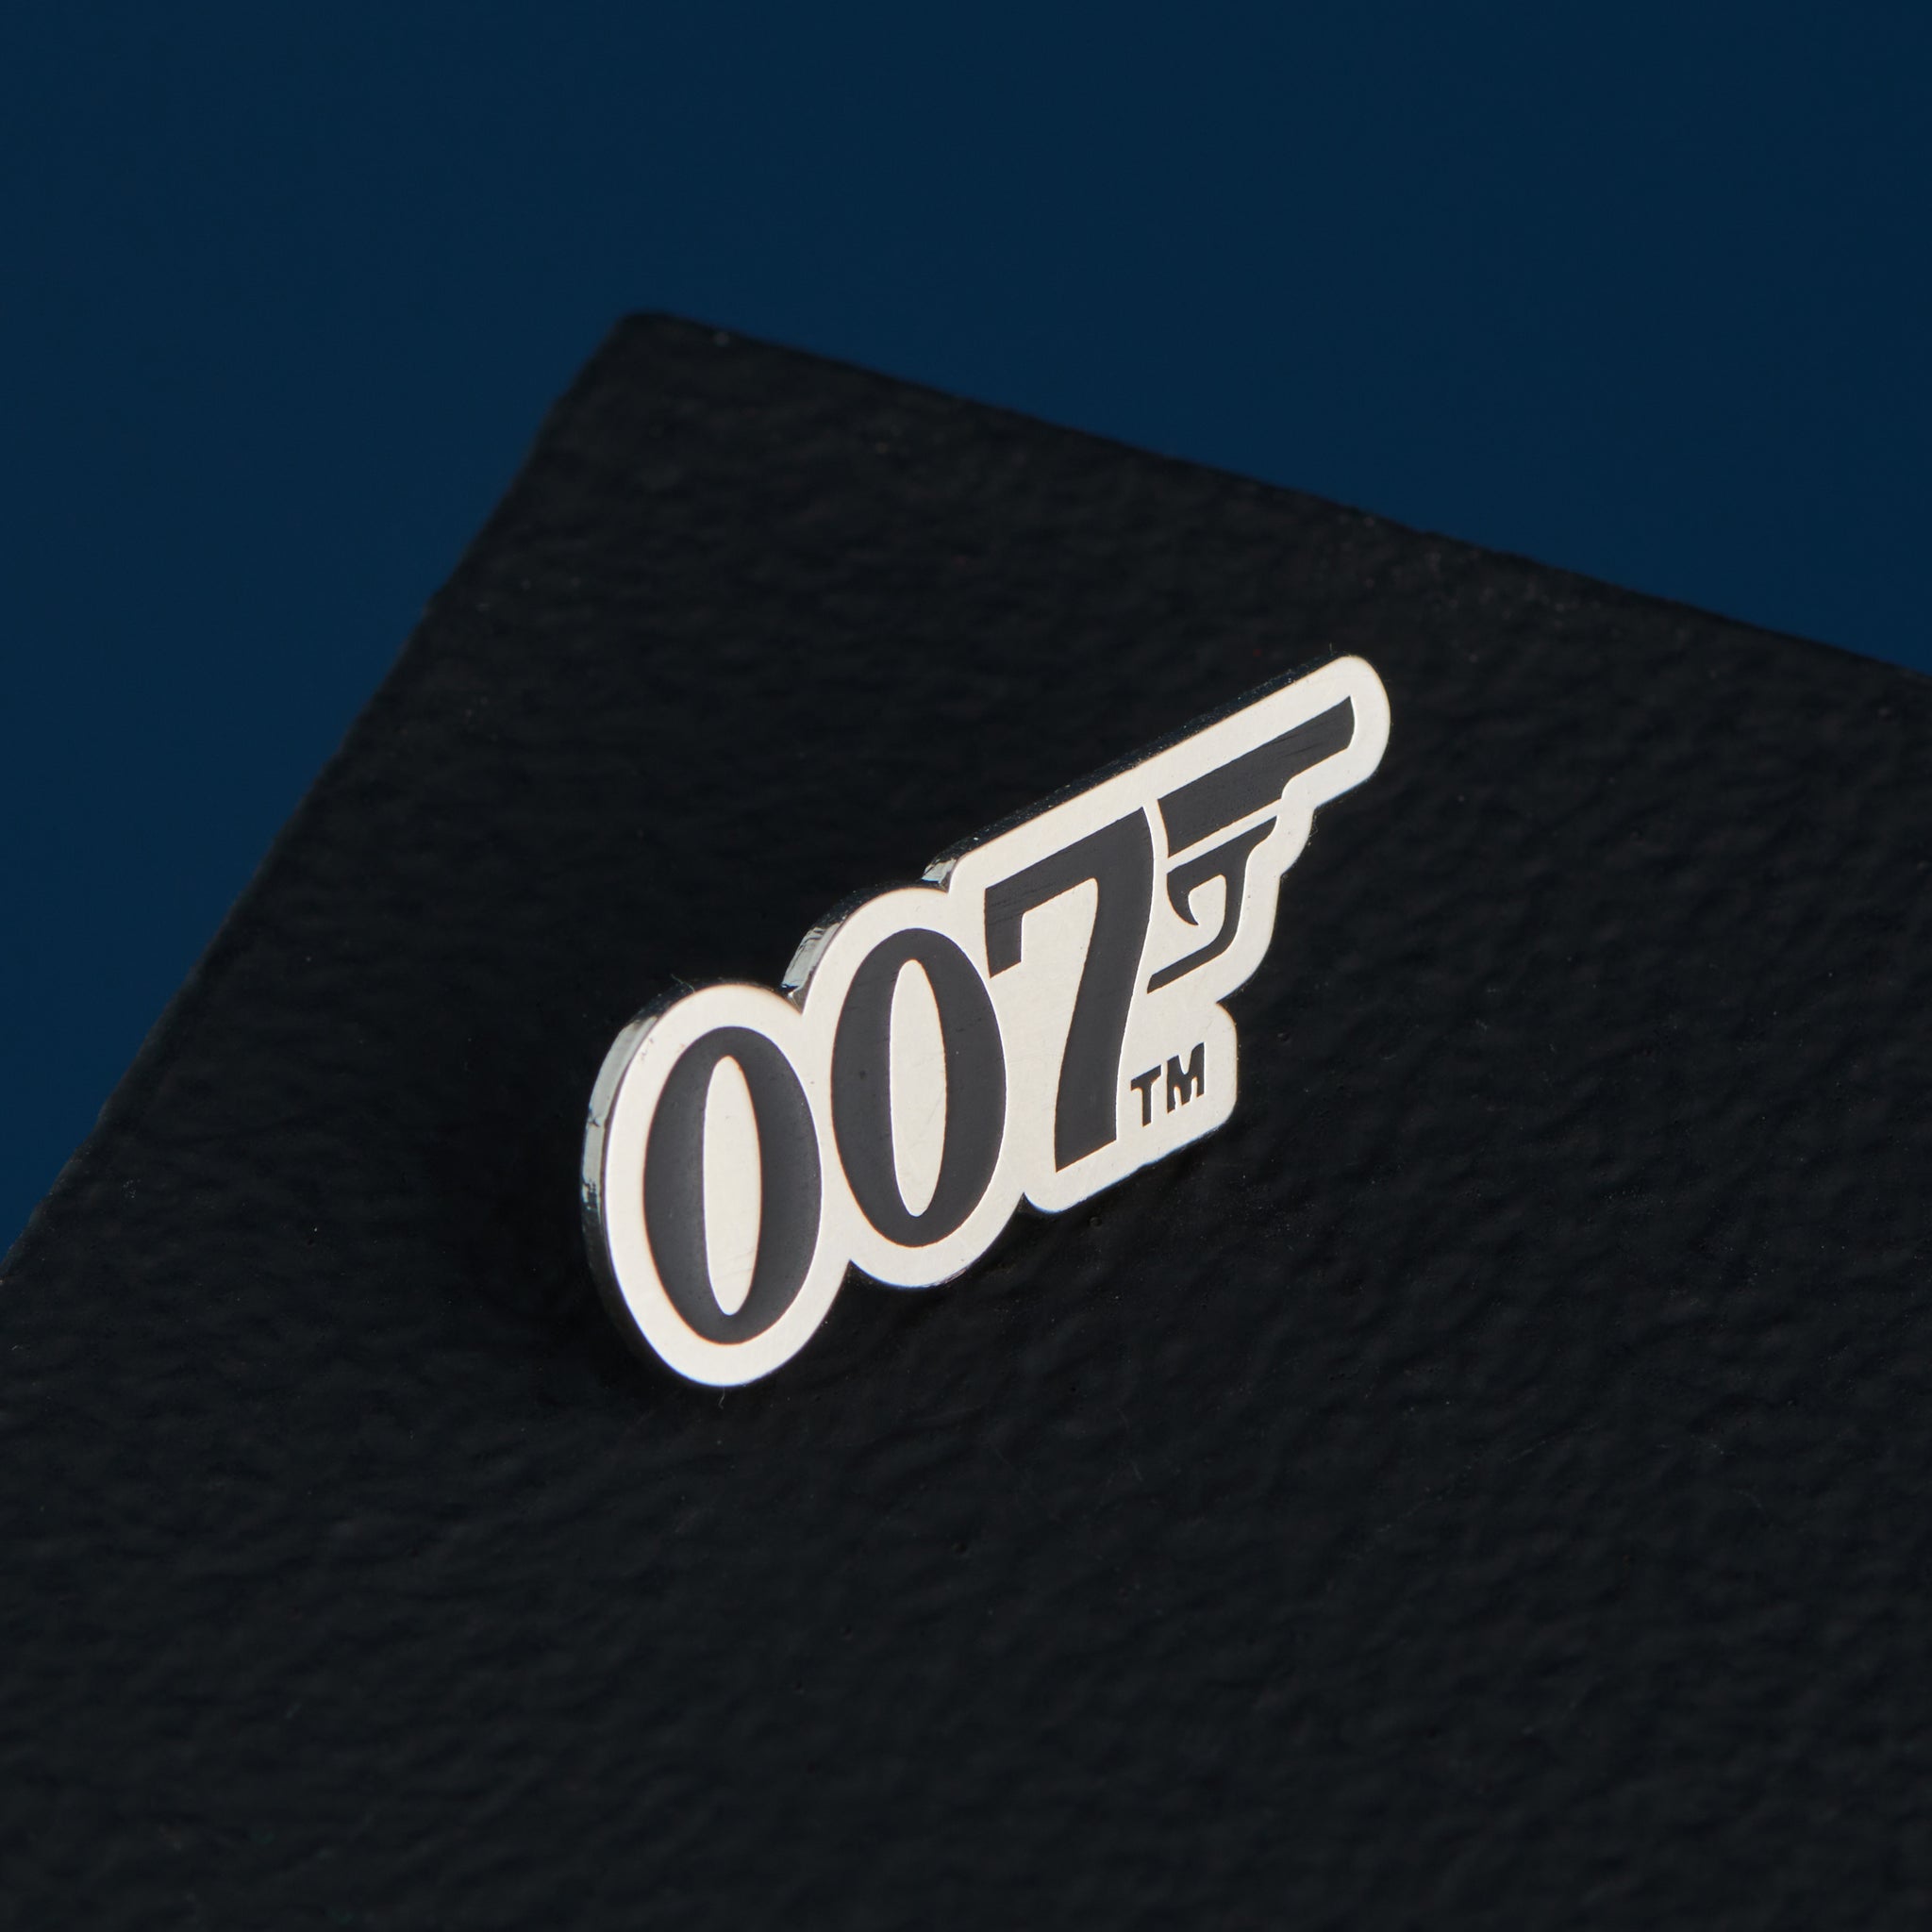 James Bond Returns in 'SPECTRE' Trailer: Watch 007 Back in Action